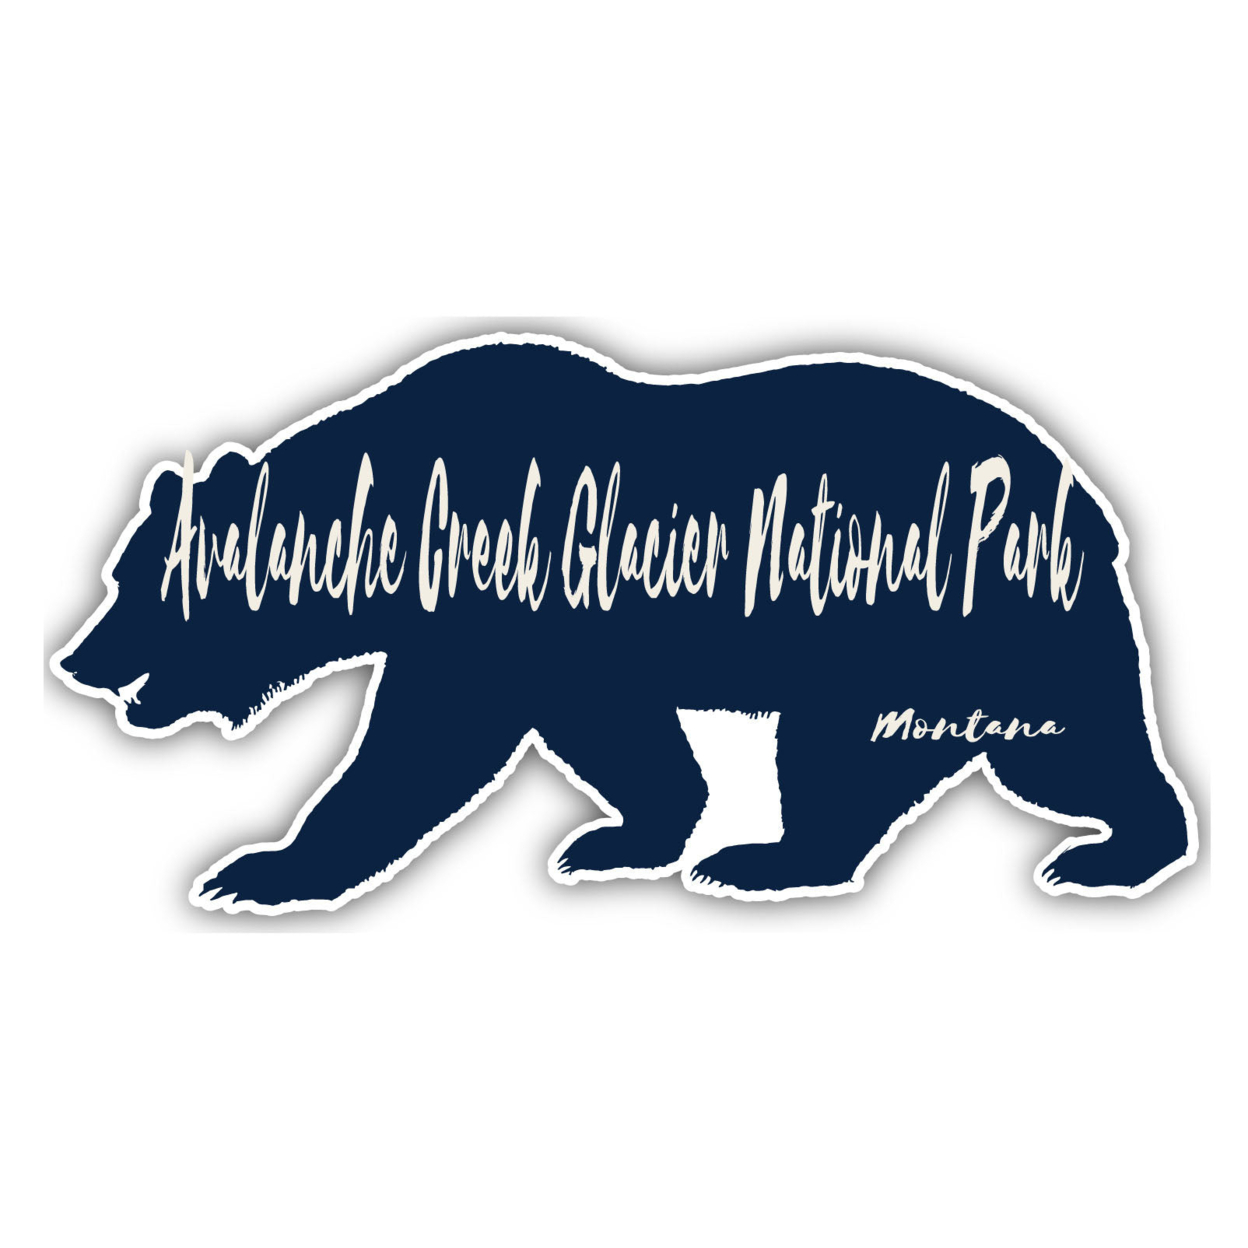 Avalanche Creek Glacier National Park Montana Souvenir Decorative Stickers (Choose Theme And Size) - 4-Pack, 12-Inch, Bear